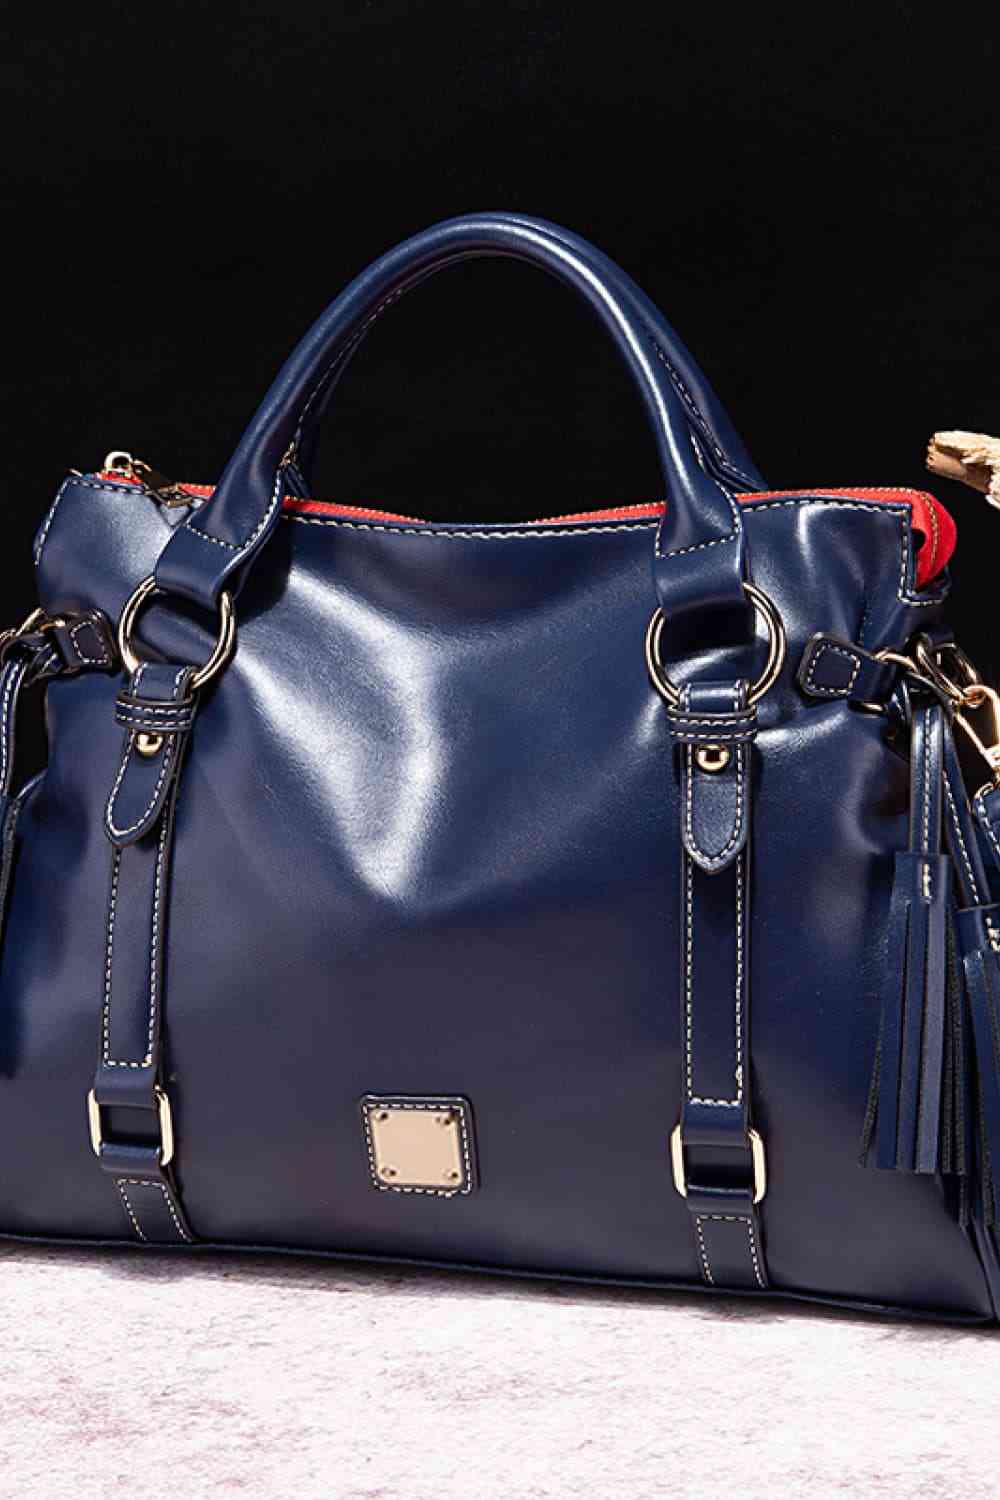 TEEK - PU Leather Handbag with Tassels BAG TEEK Trend Navy  